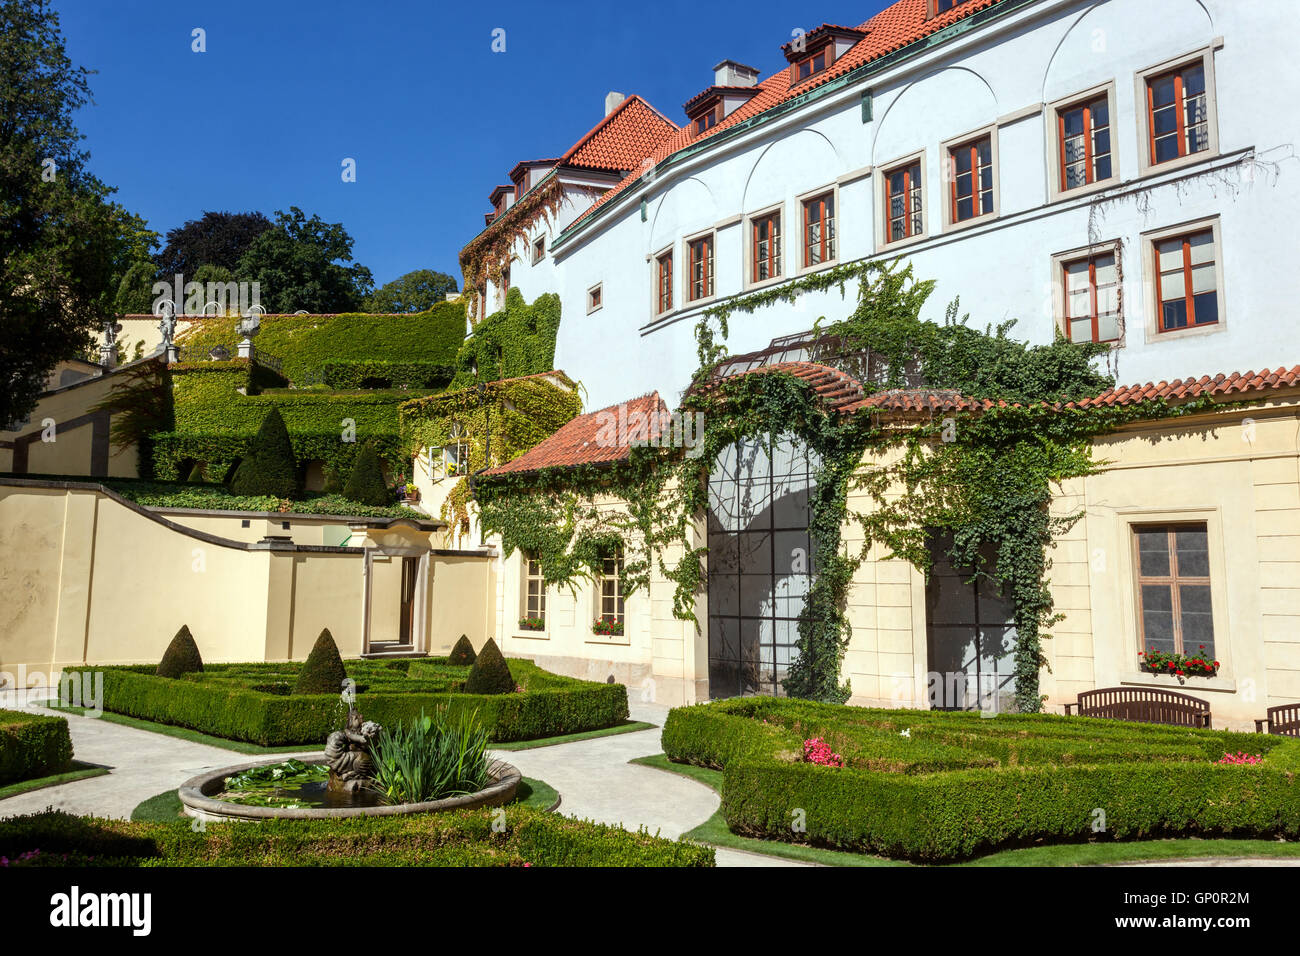 Vrtba garden, Lesser Town, Praga, Repubblica Ceca Foto Stock